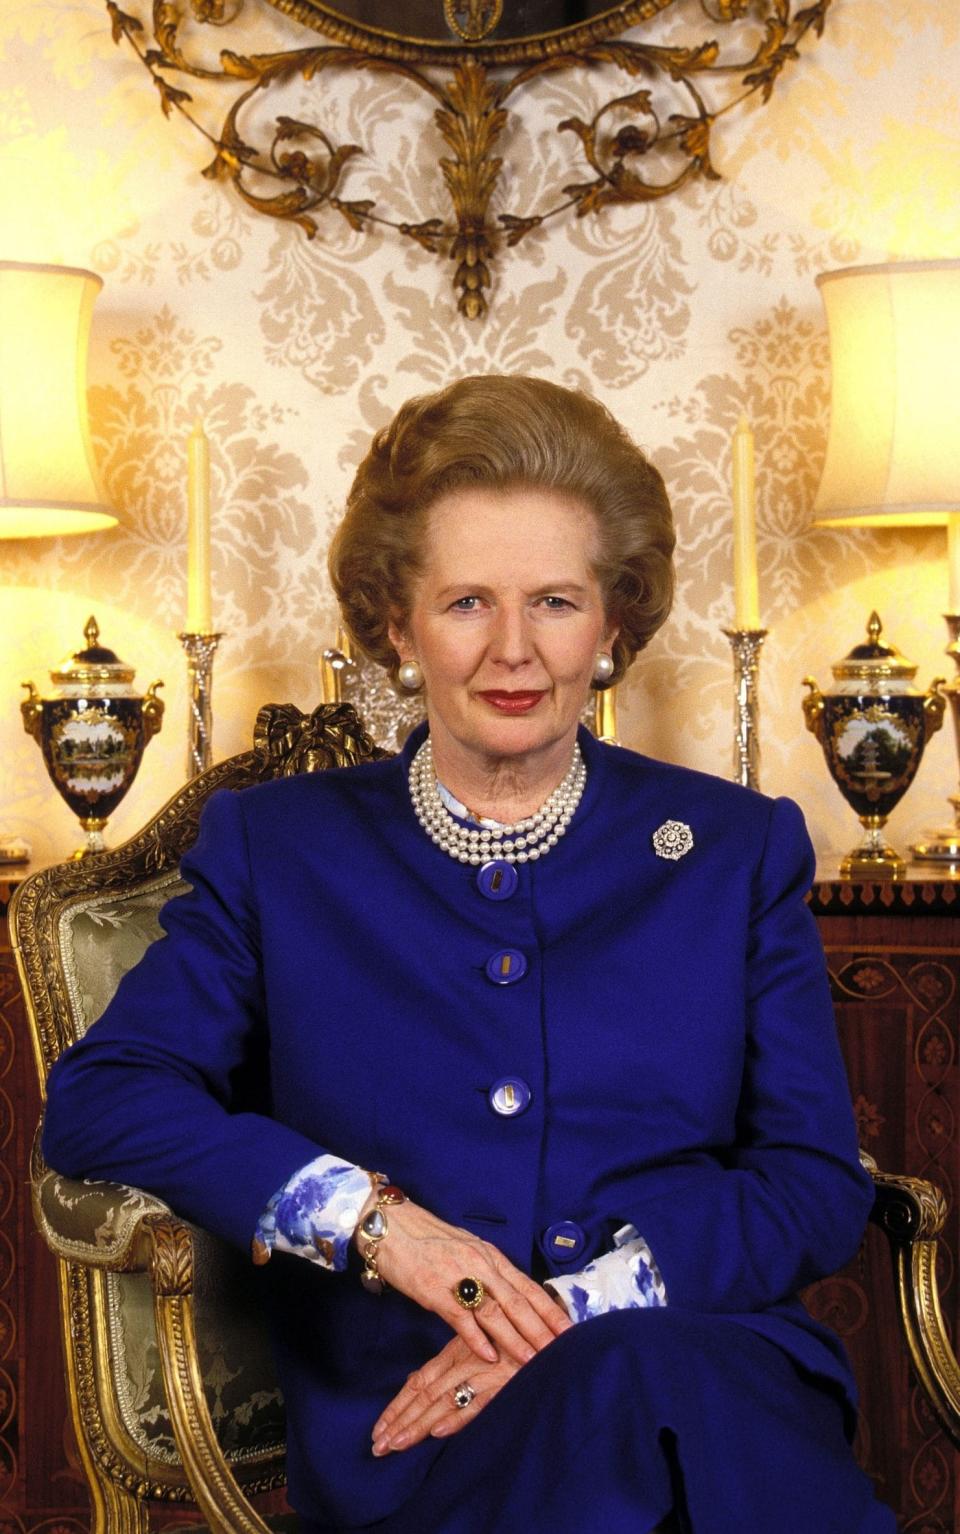 Margaret Thatcher jewellery - Jean GUICHARD/Gamma-Rapho via Getty Images